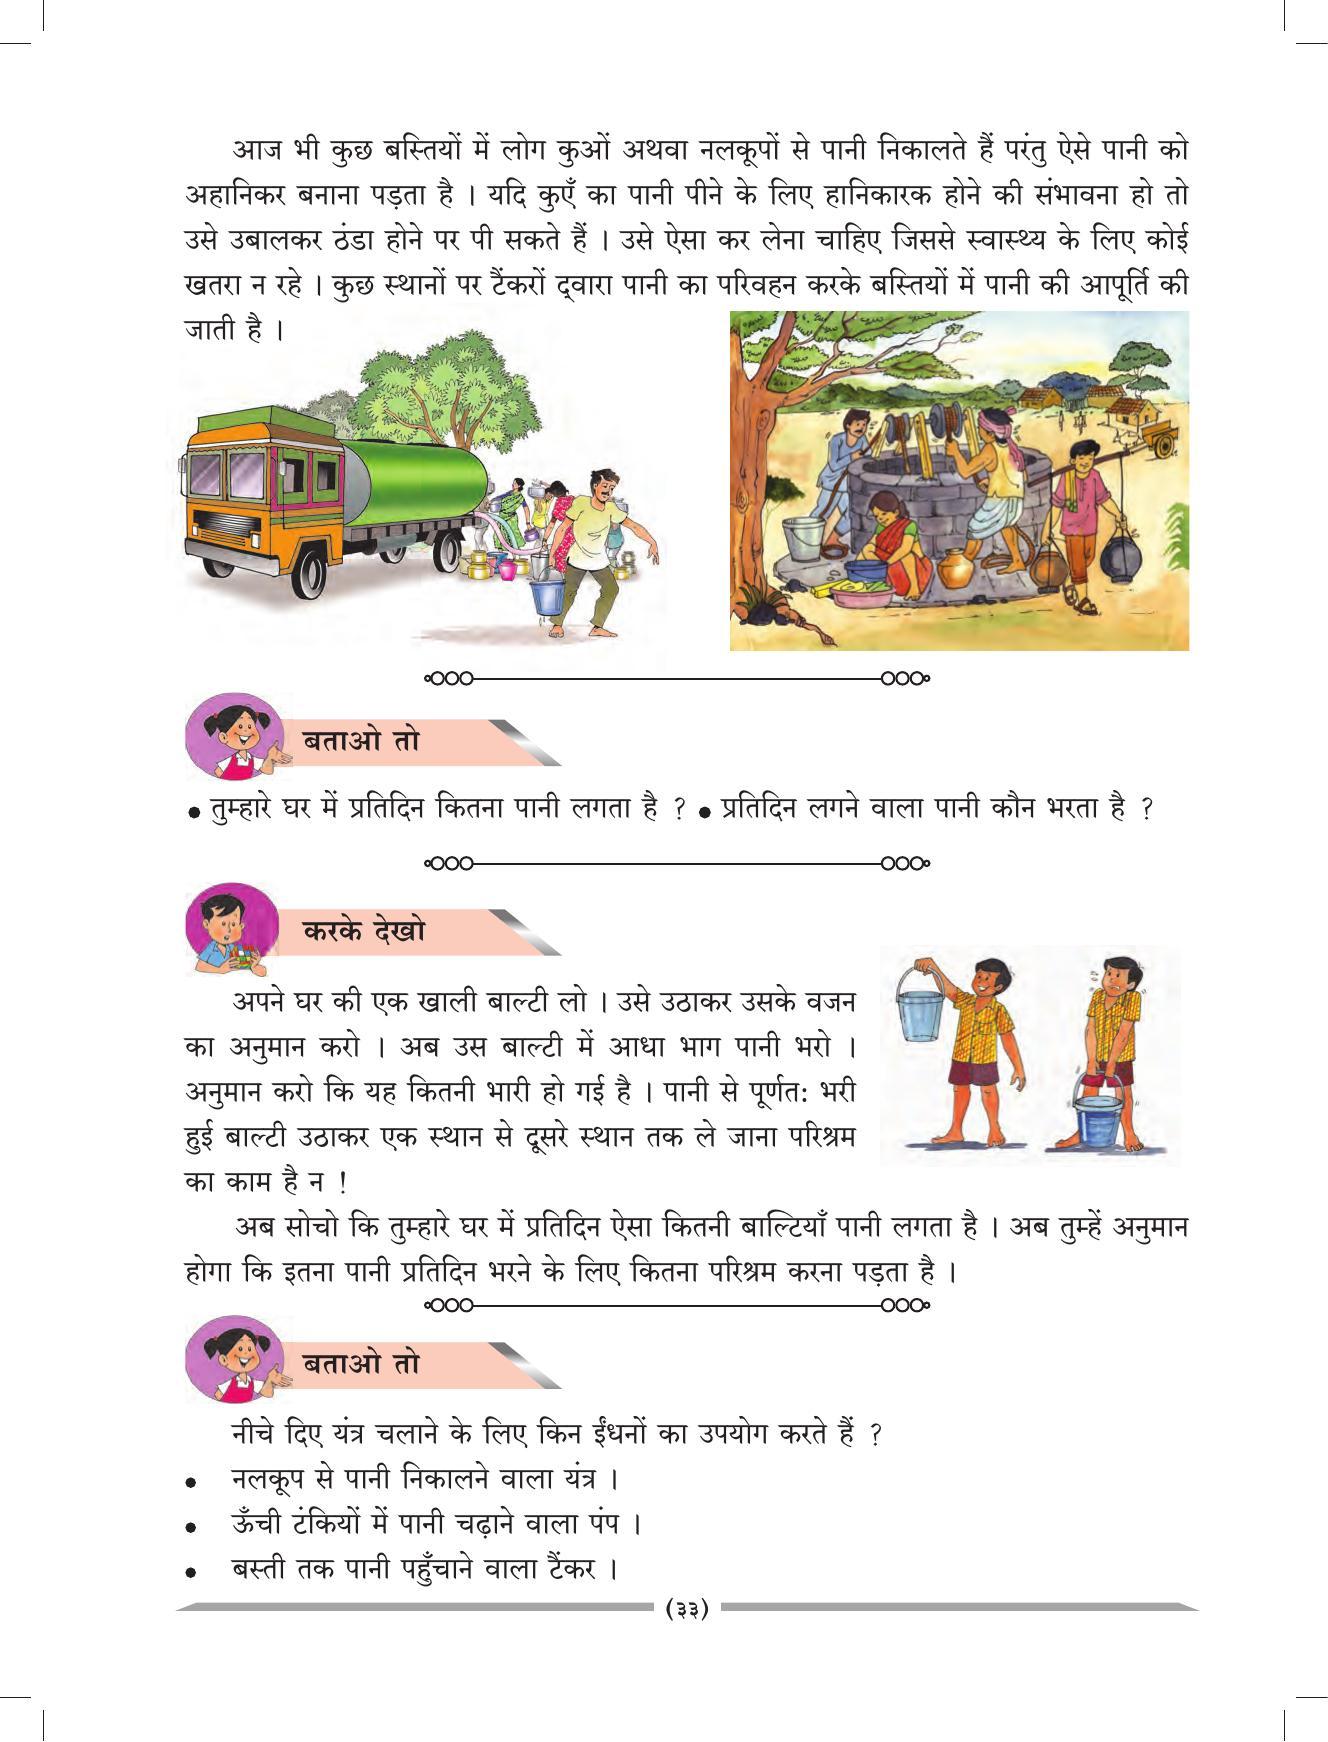 Maharashtra Board Class 4 EVS 1 (Hindi Medium) Textbook - Page 43